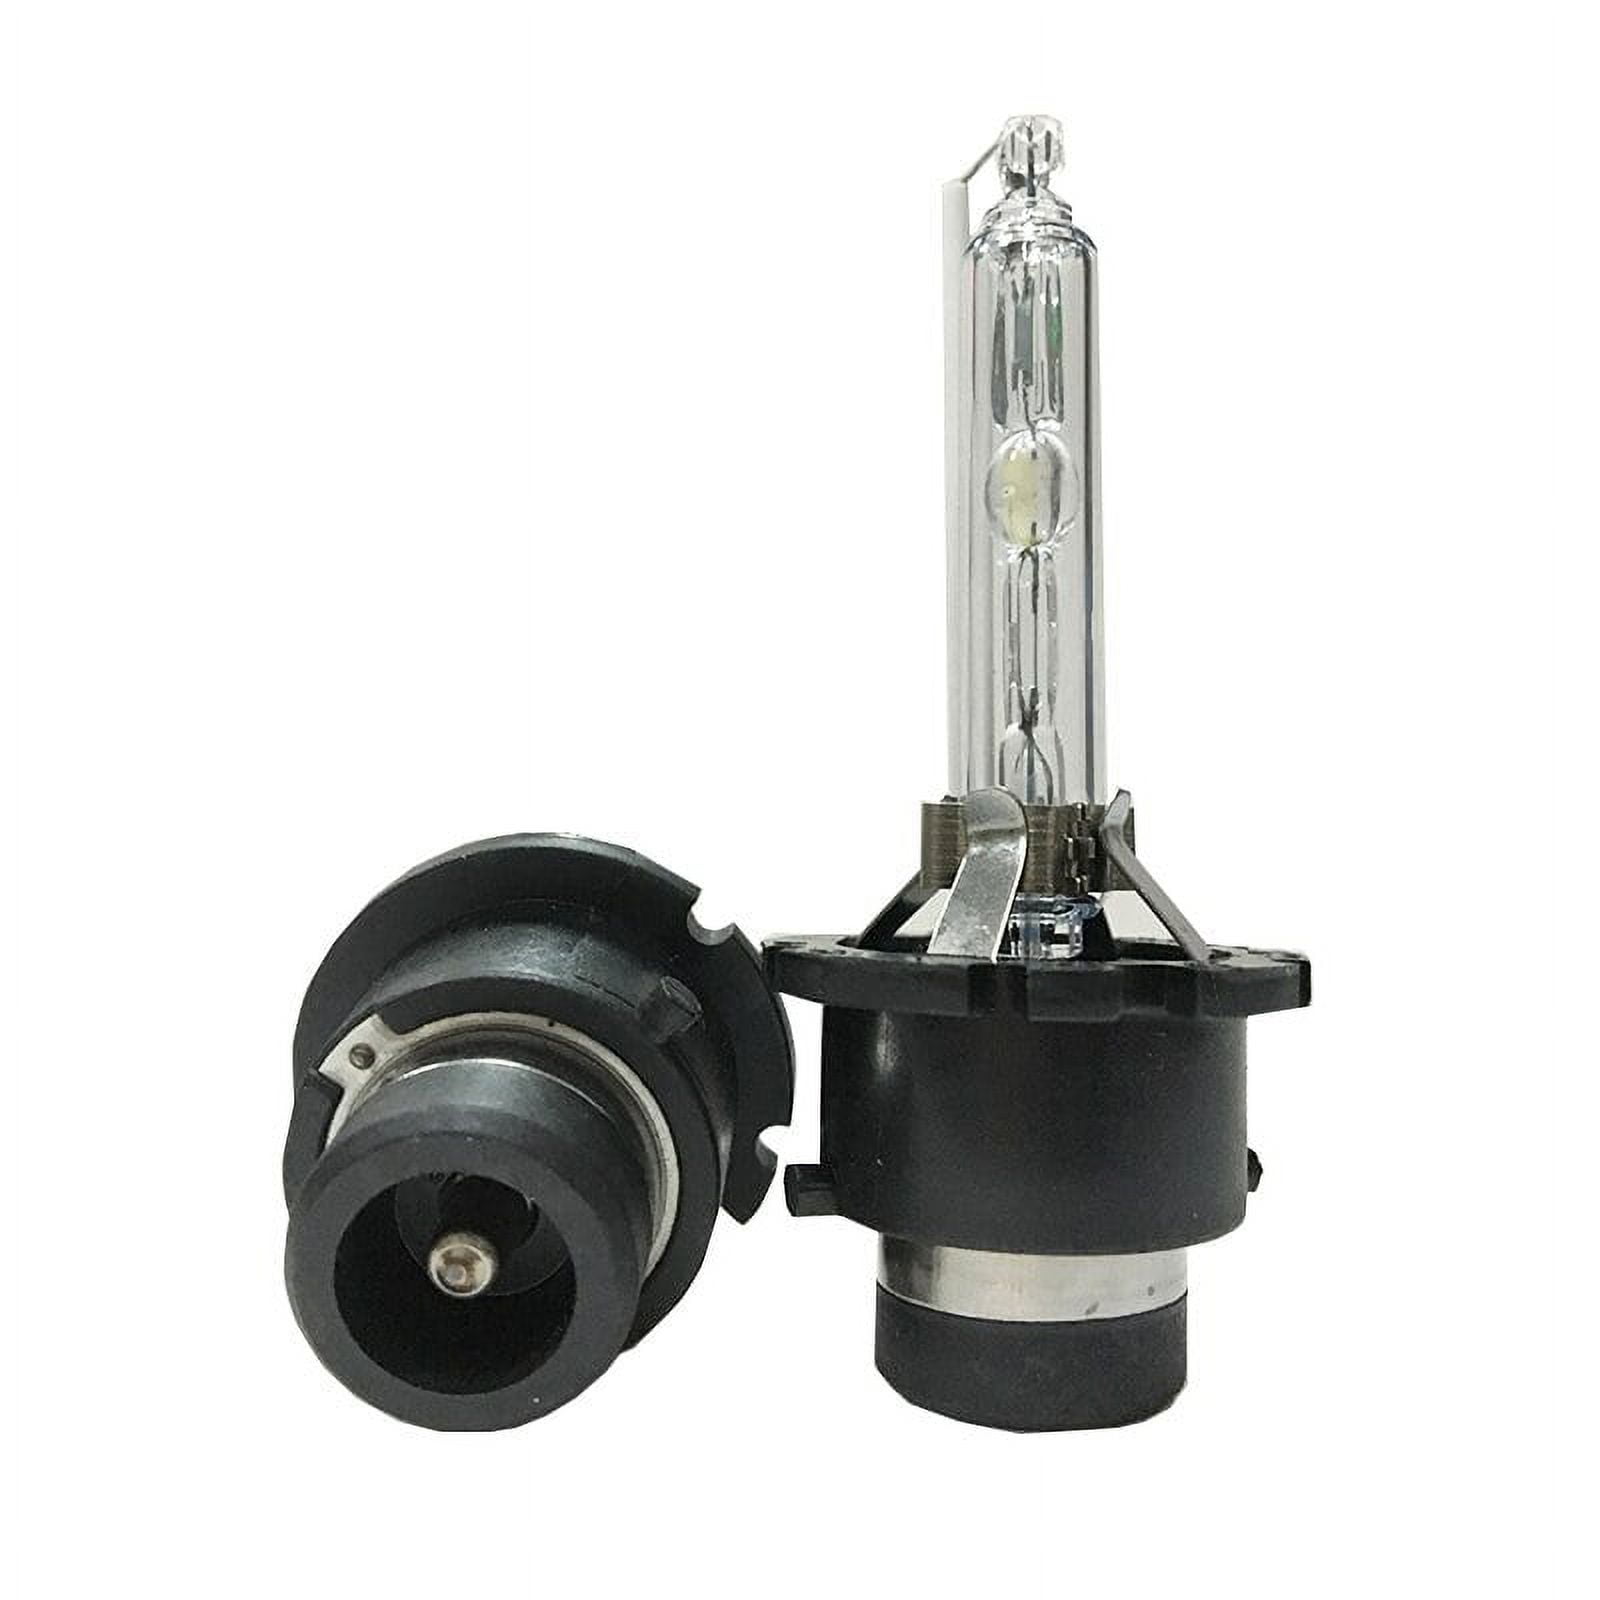 A1 NEW D2S XENON Factory Headlight Replacement HID Bulbs 35W 4K 6K 8K 10K  12K